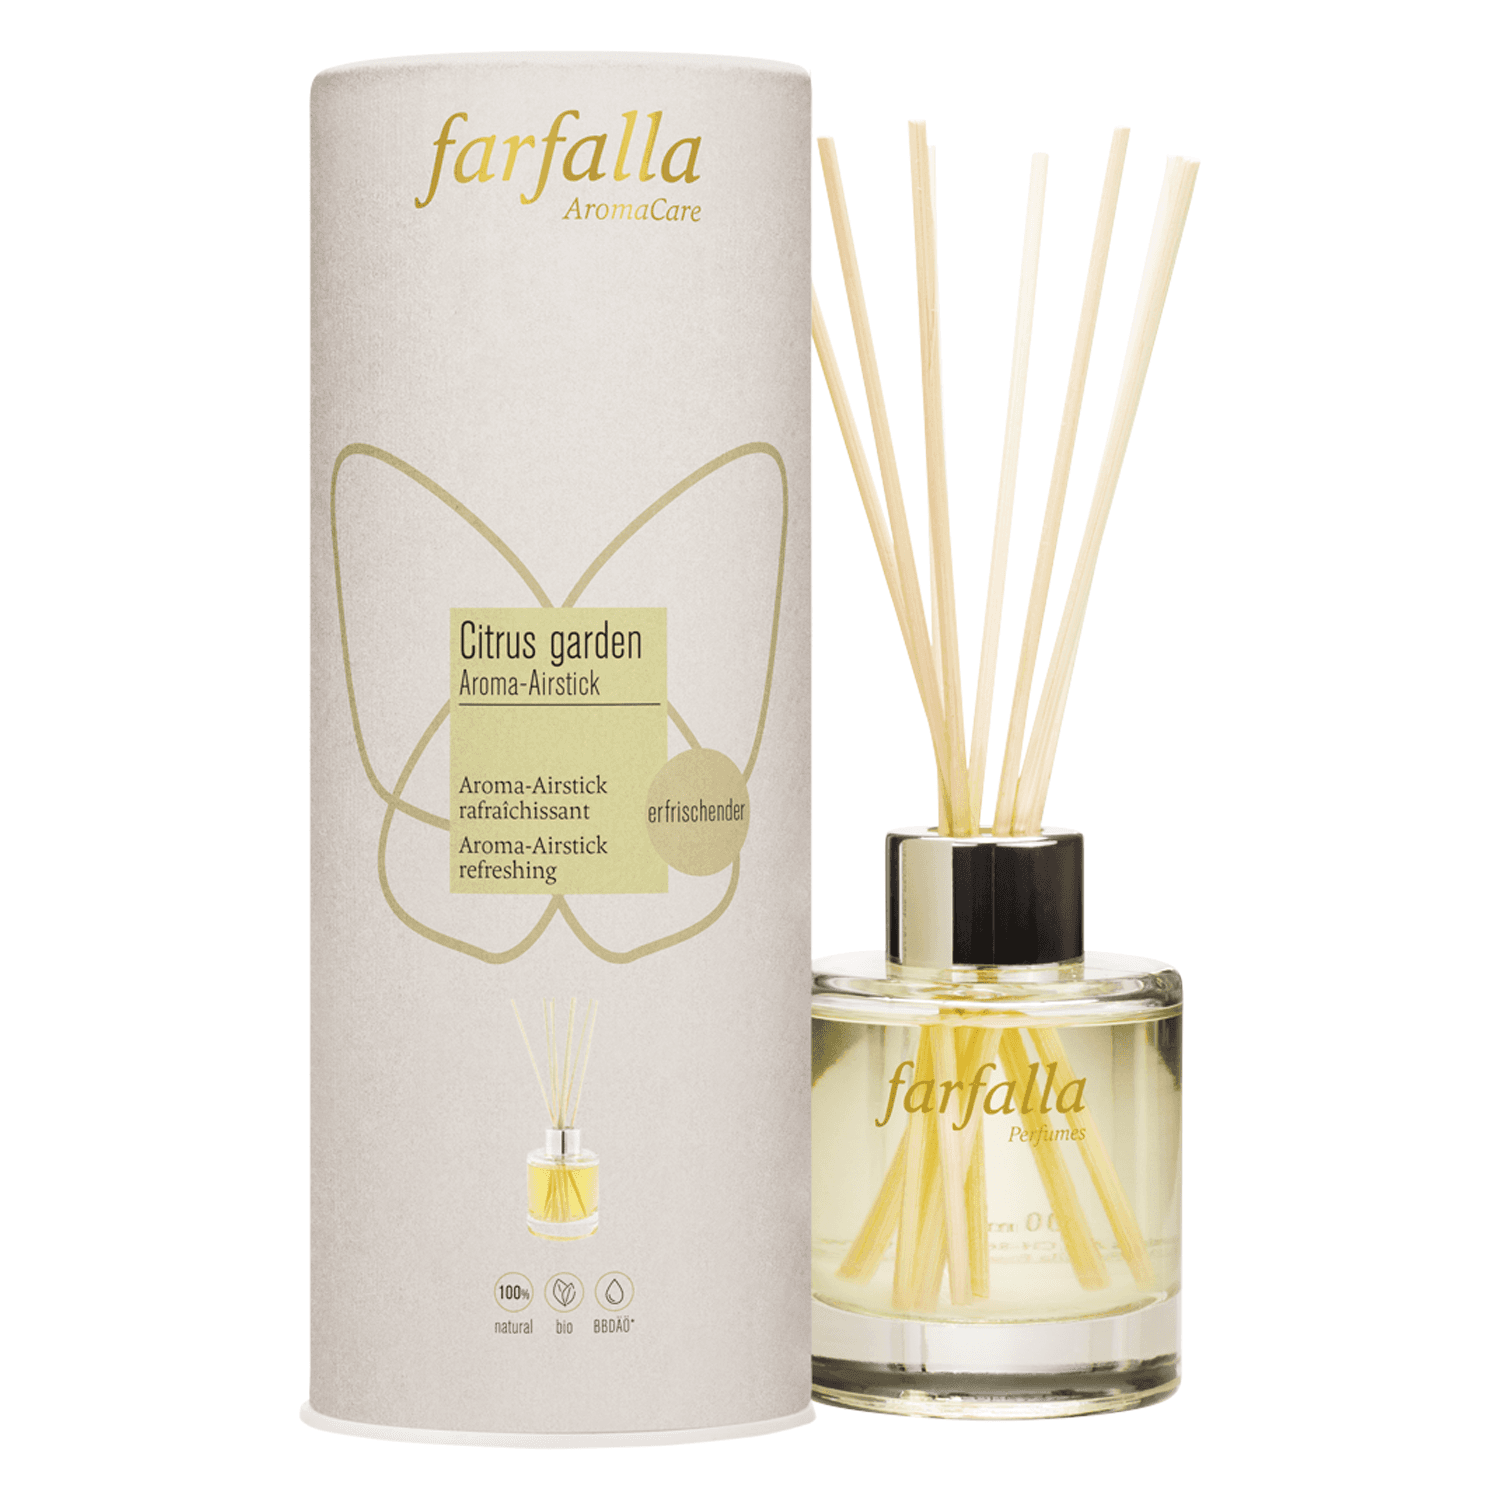 Farfalla Aroma-Airstick - Citrus Garden Refreshing Aroma Airstick